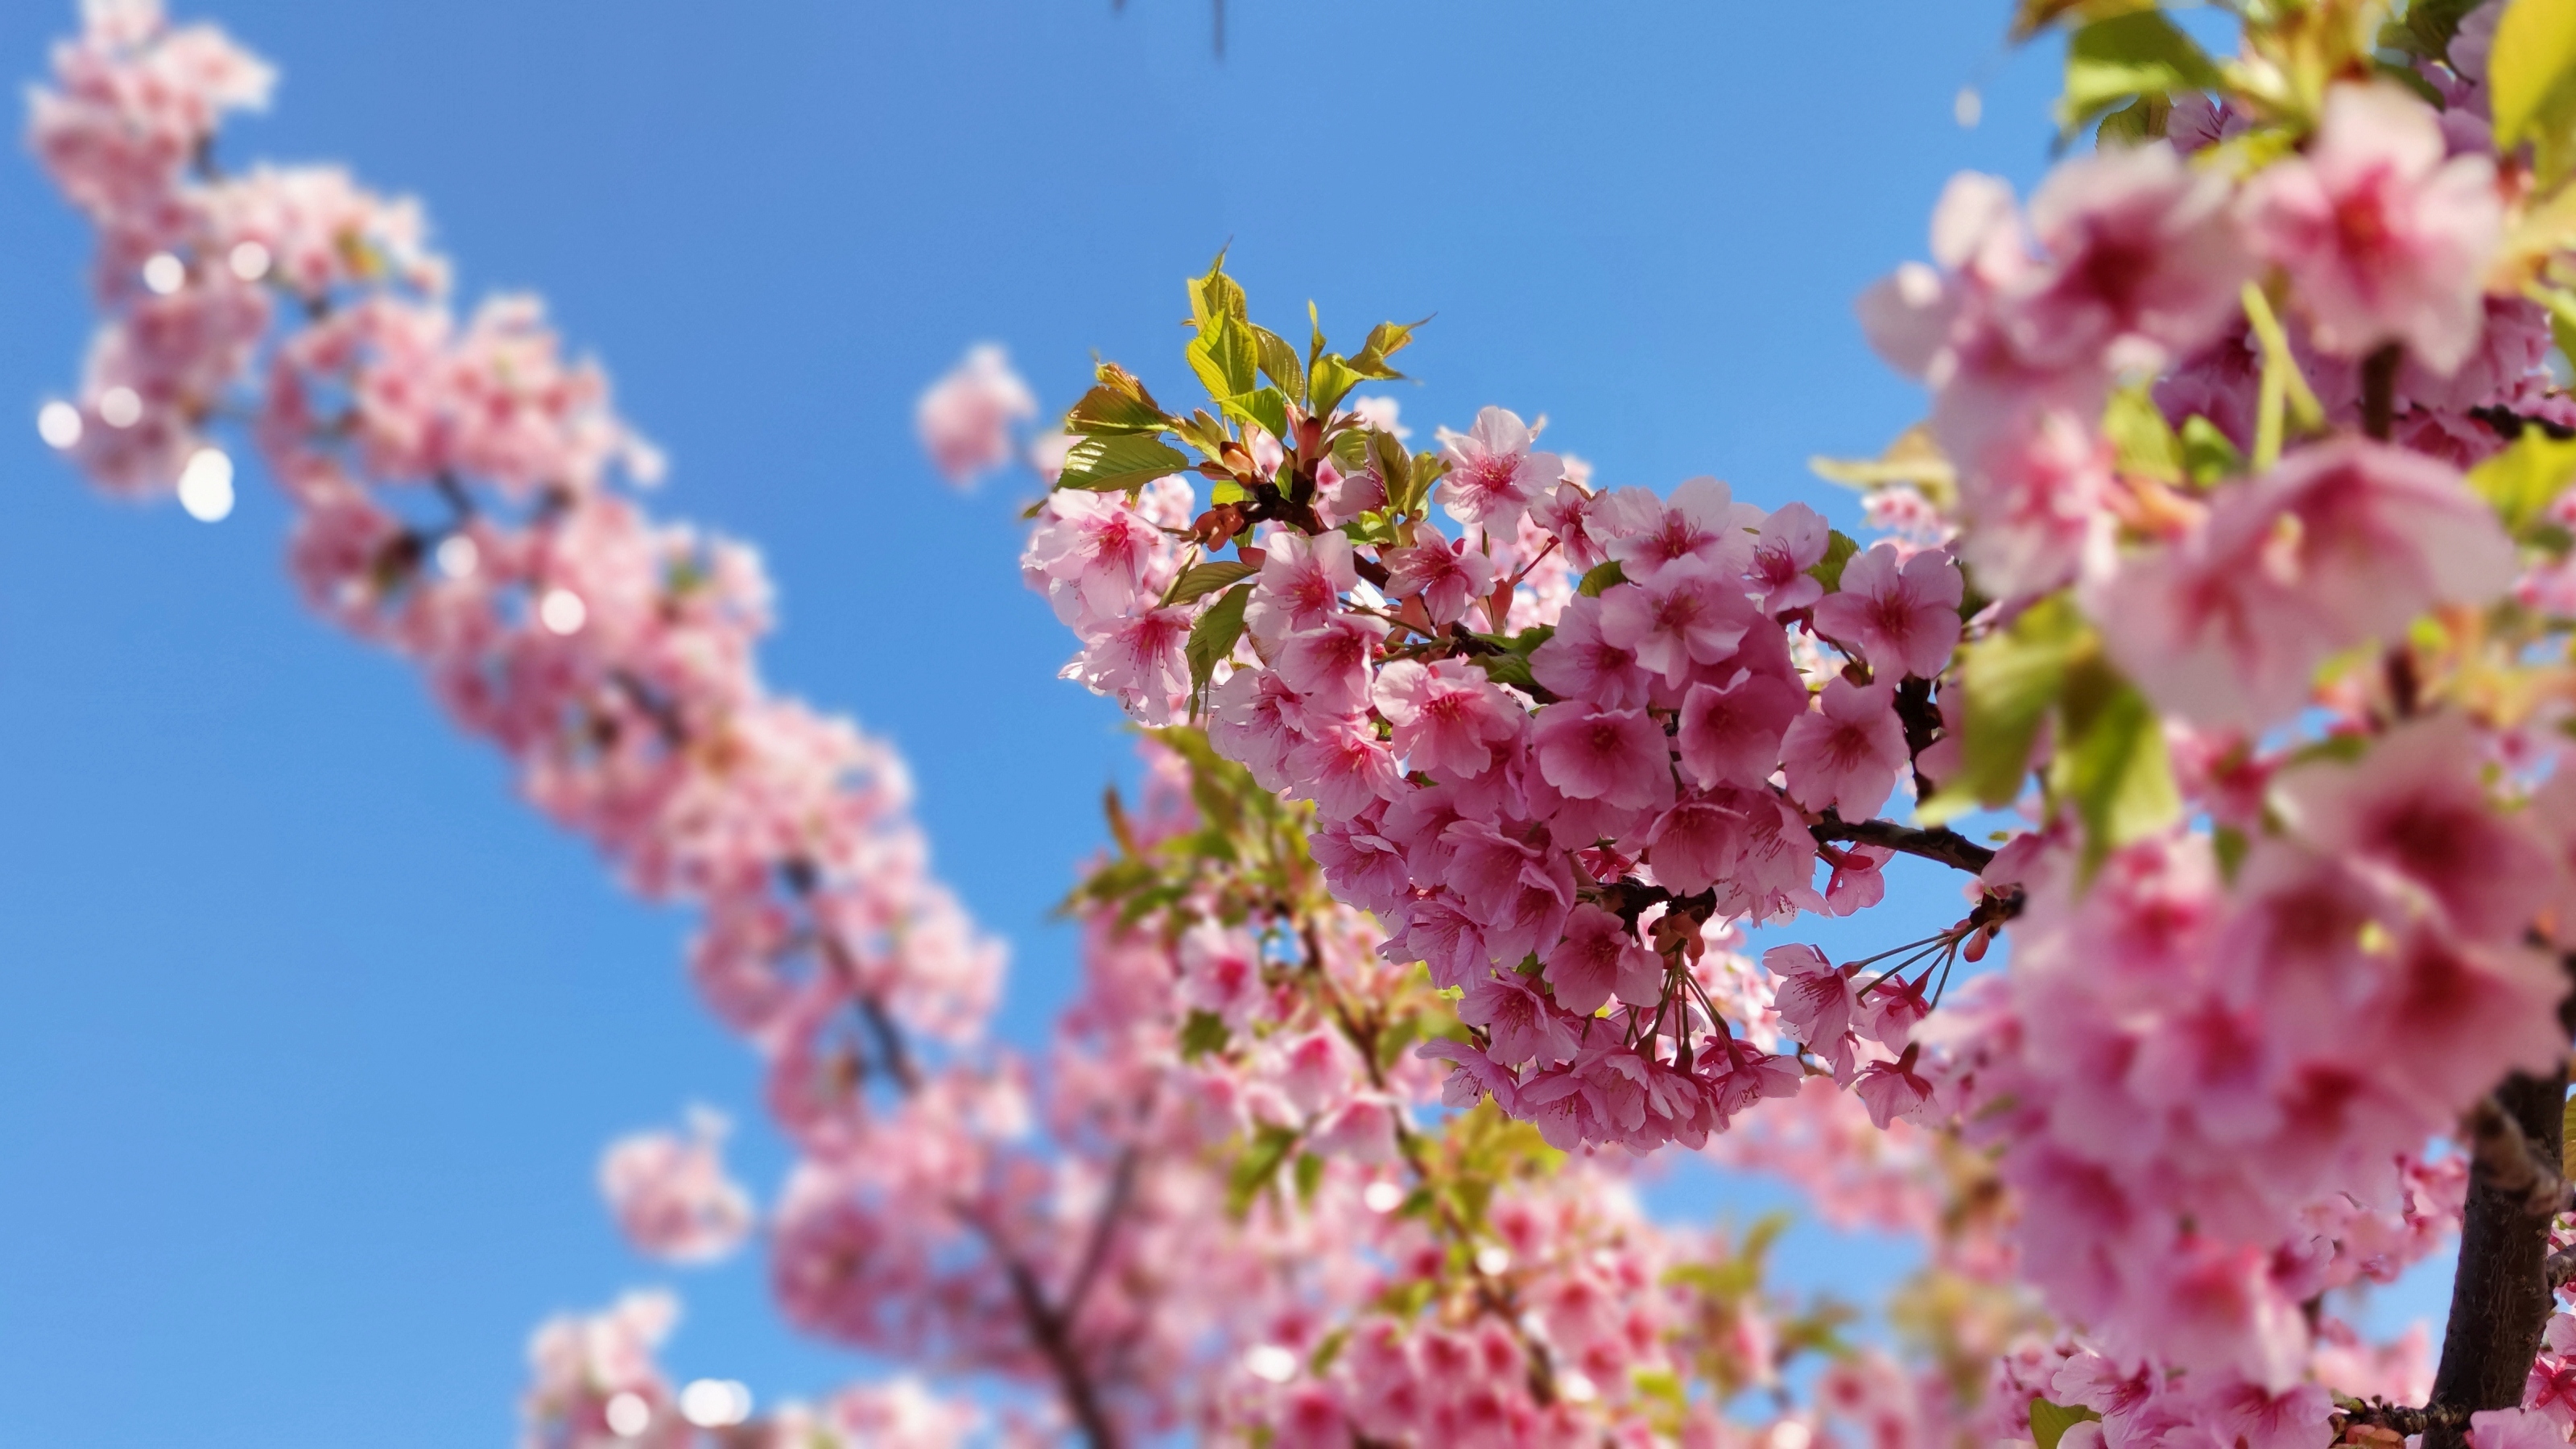 General 3200x1800 cherry blossom Japan Kaizuka Osaka Prefecture flowers plants nature macro